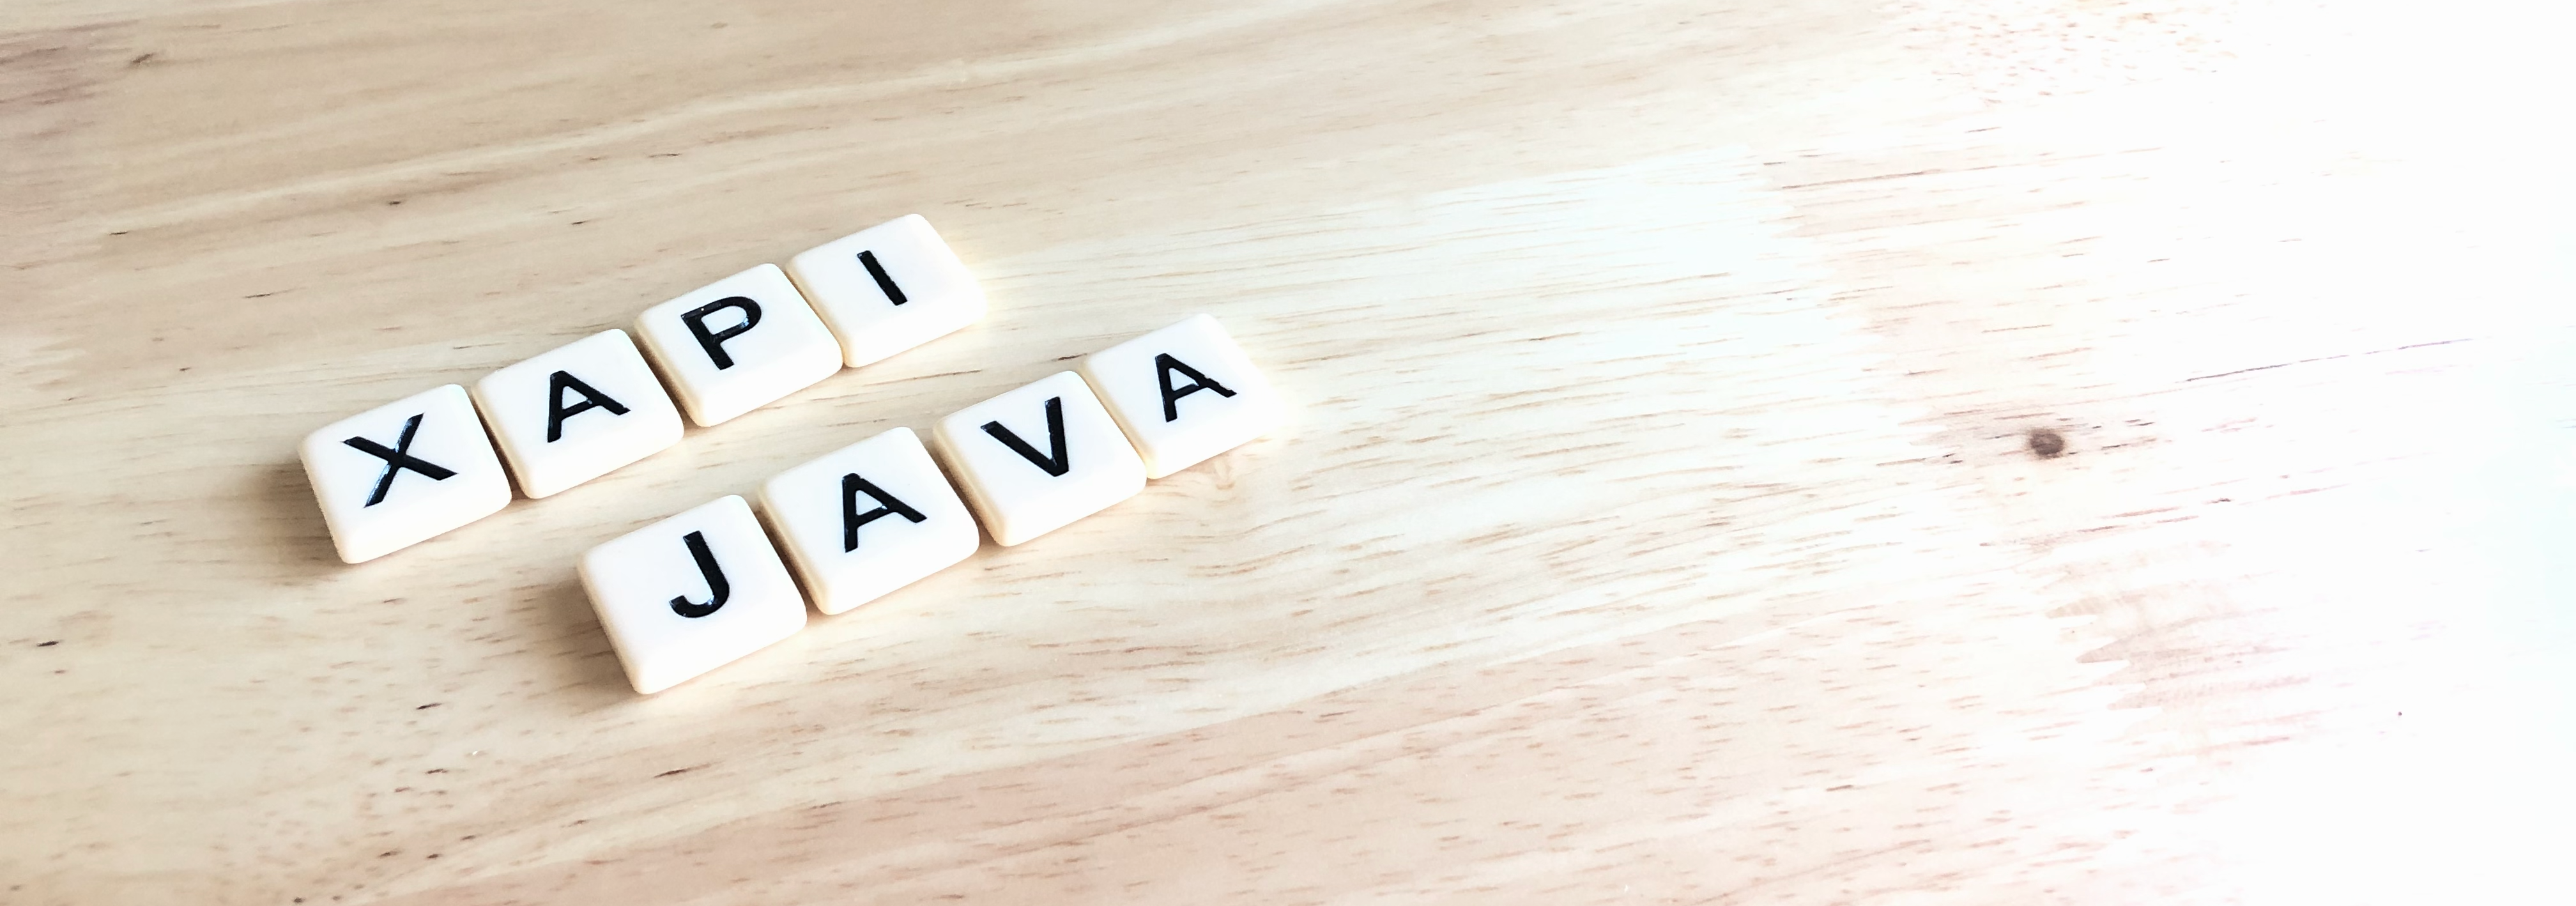 xAPI Java